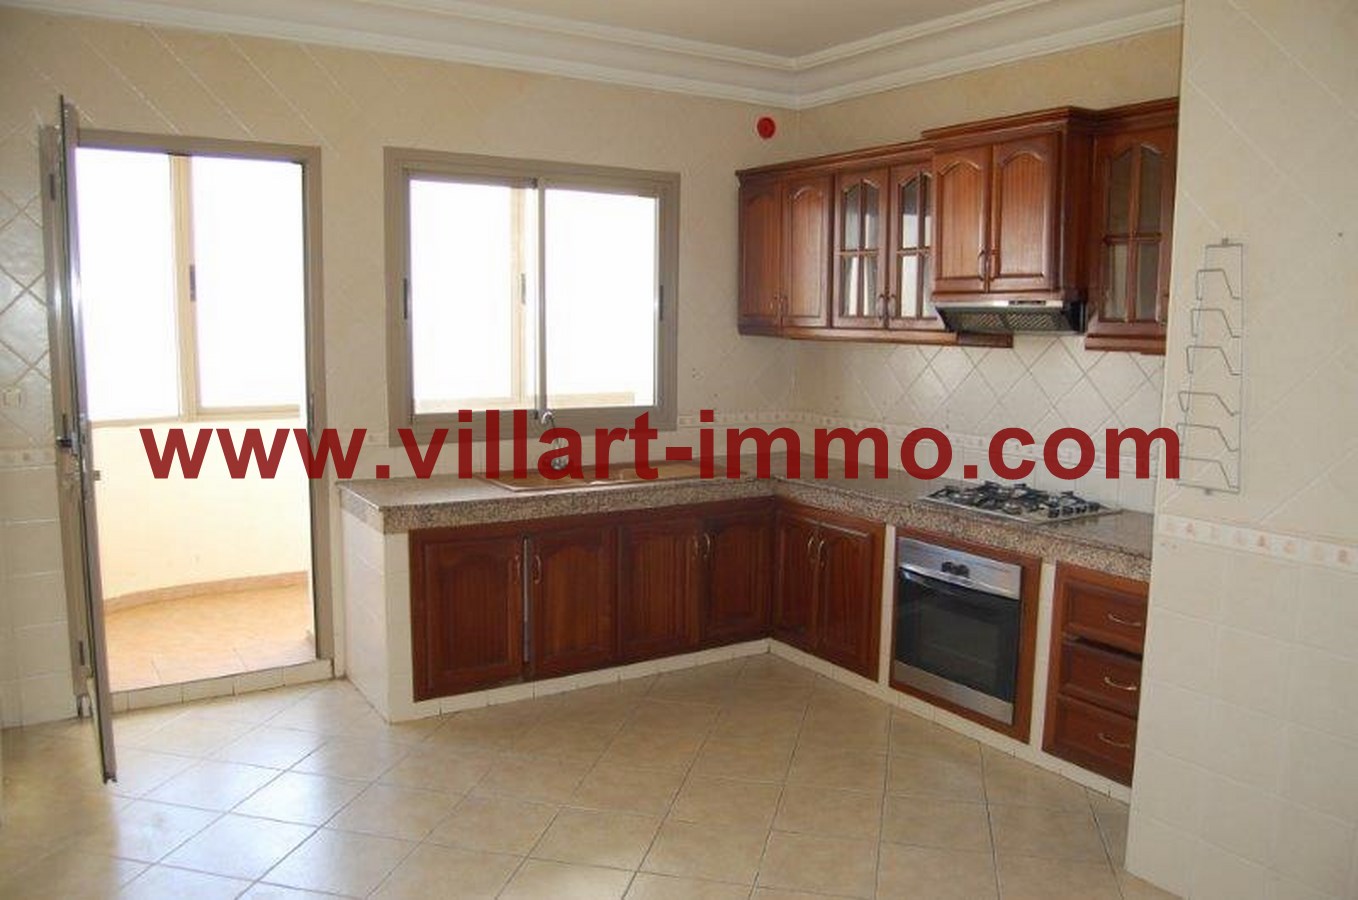 4-Location-Appartement-Non meublé-Tanger-Cuisine -L716-Villart immo